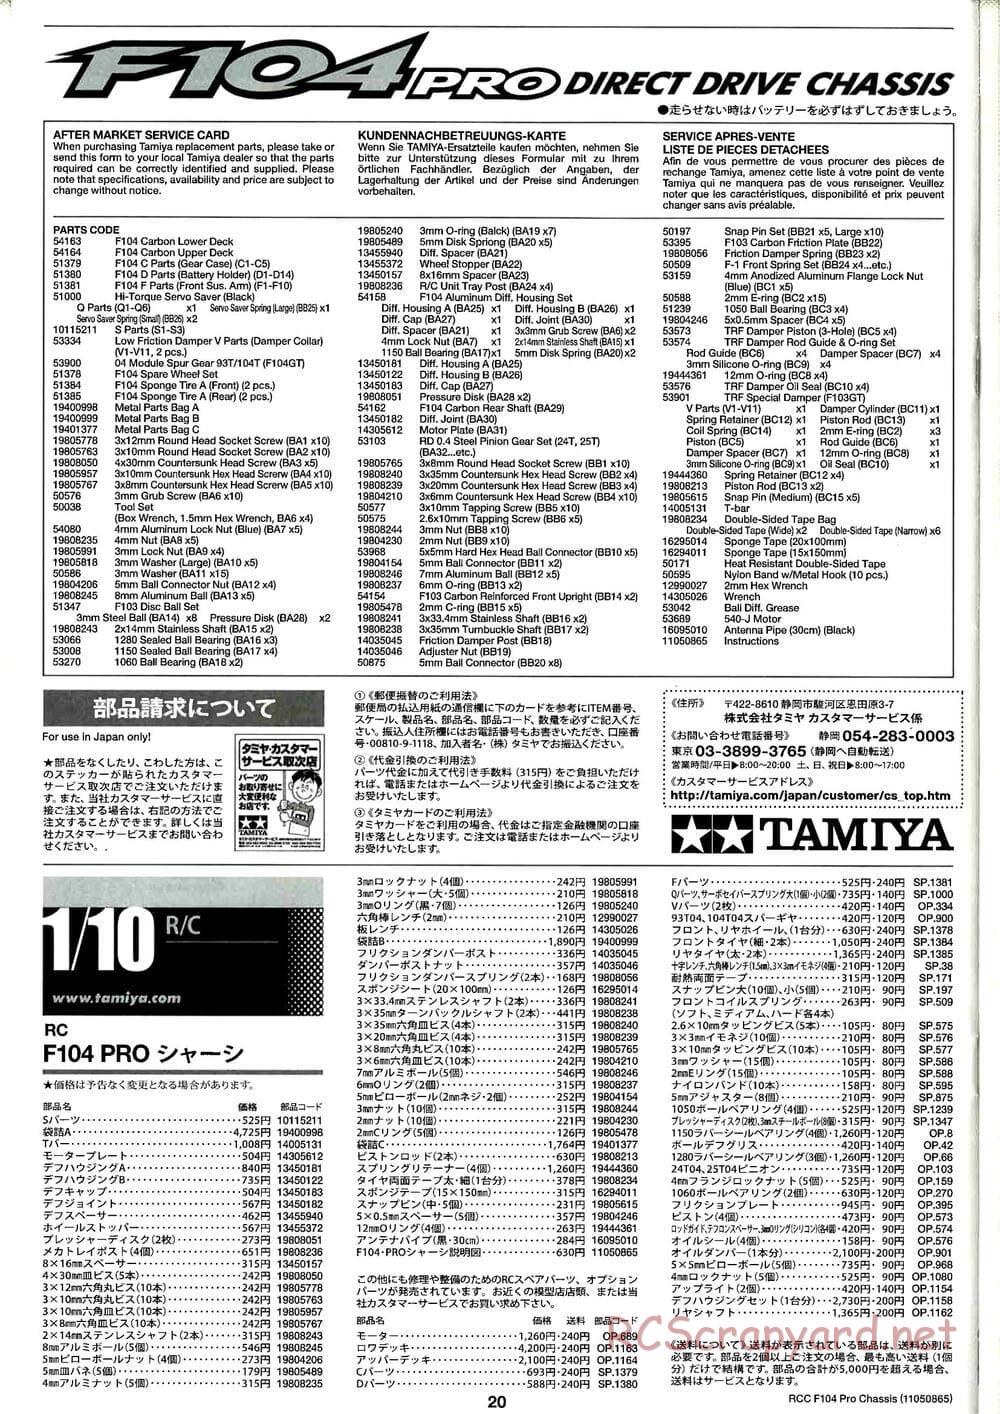 Tamiya - F104 Pro Chassis - Manual - Page 20